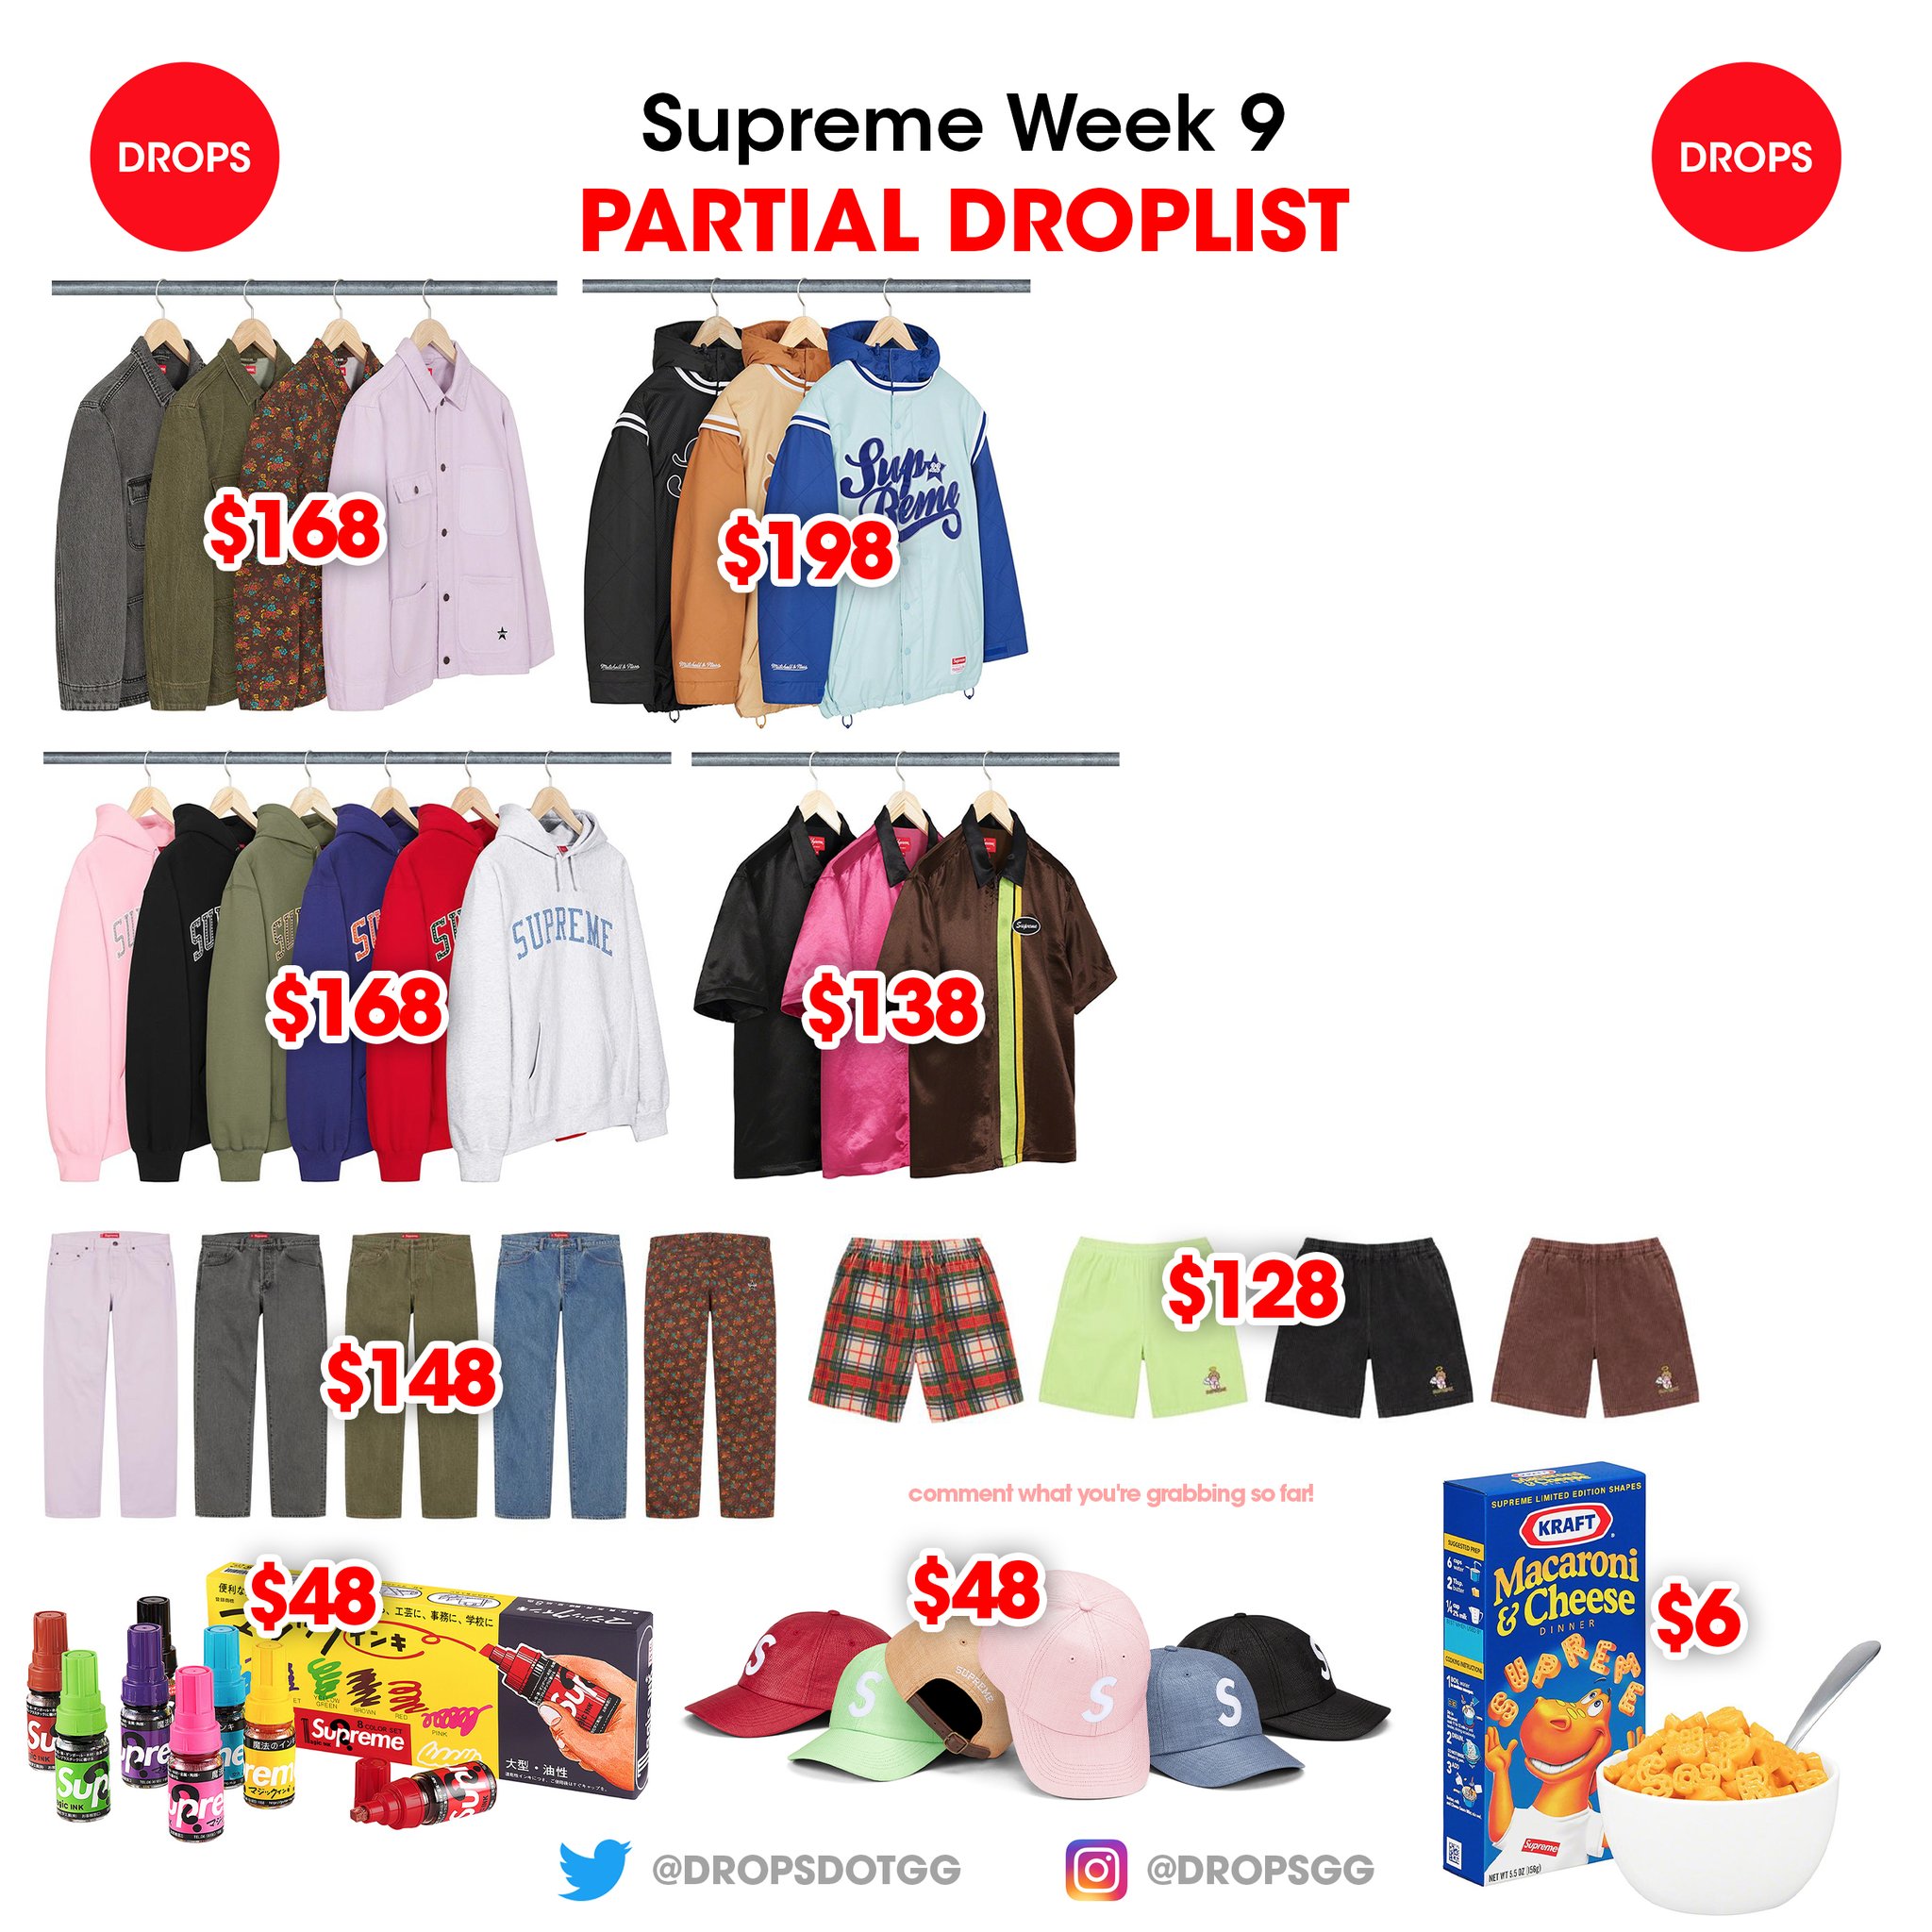 Supreme Drops on Twitter "Supreme Week 9 Partial Droplist & Retails